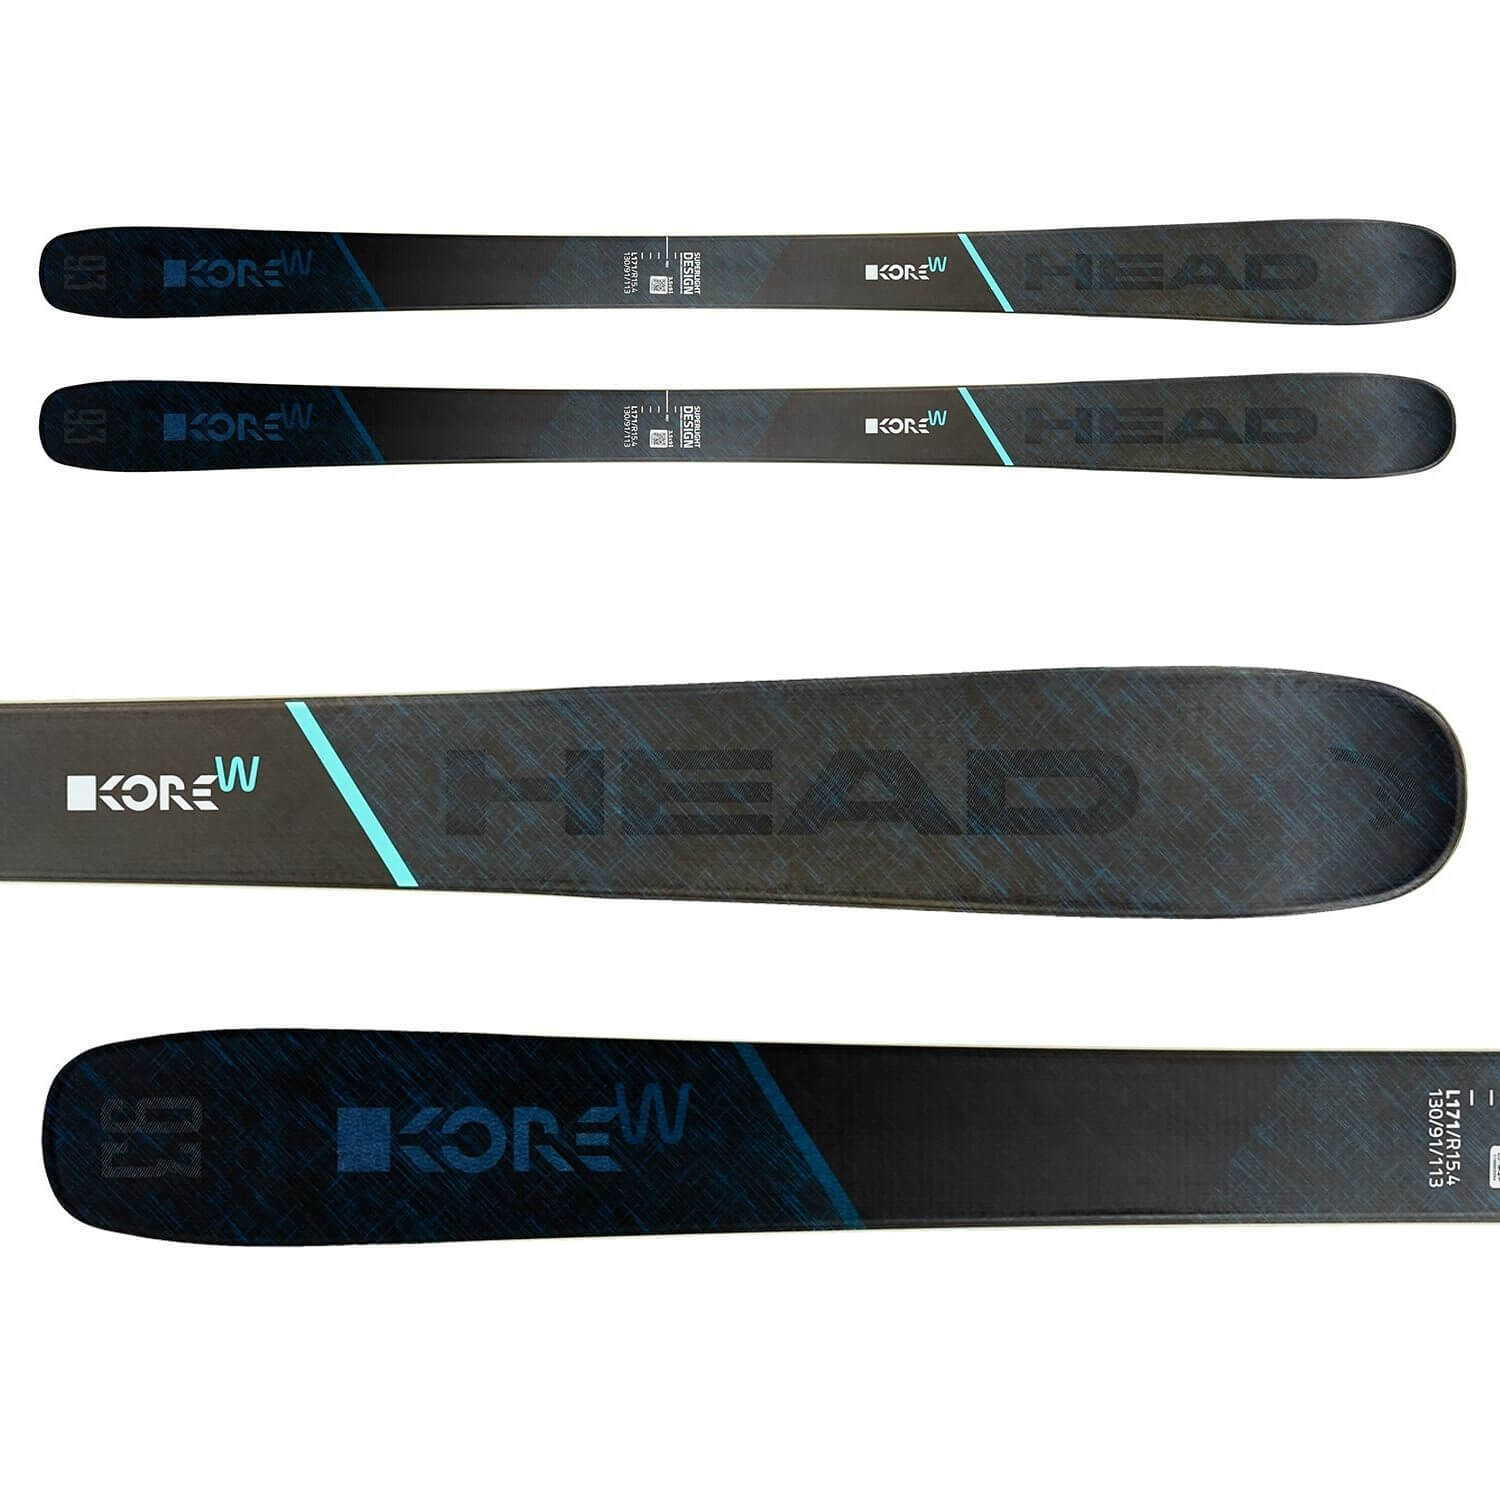 HEAD Kore 93 W u. binding 20/21 Ski